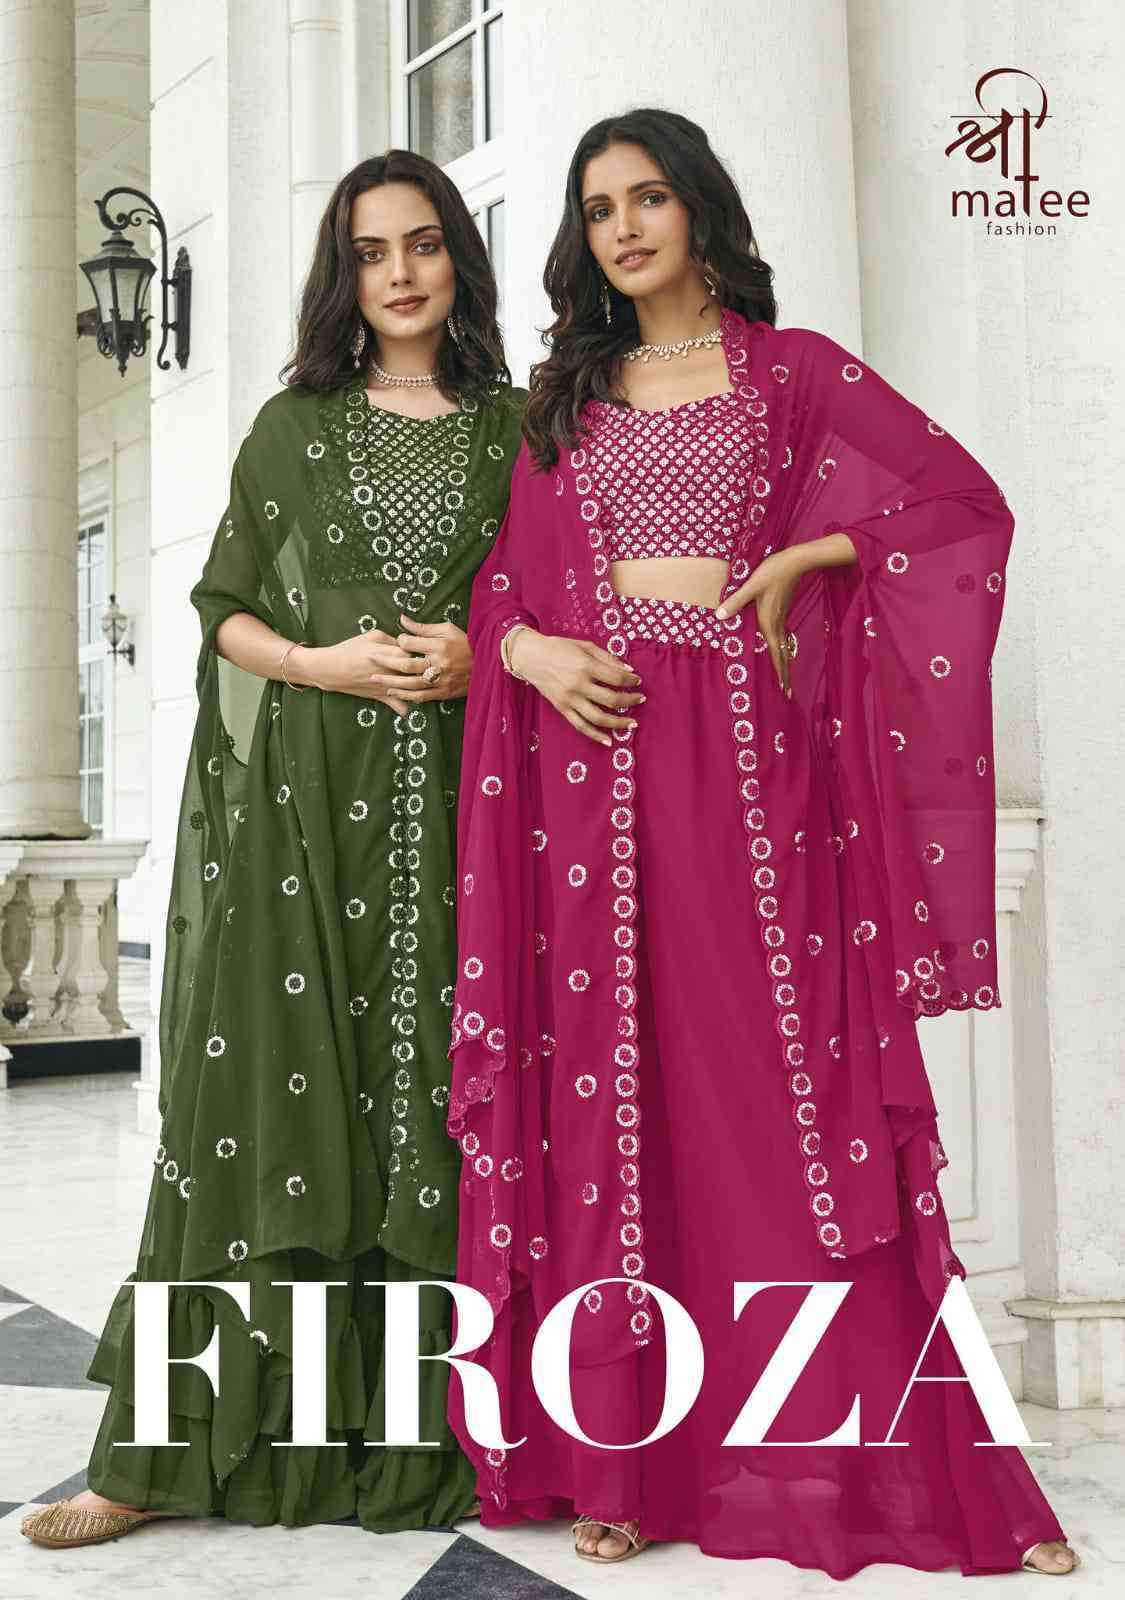 Shreematee Presents Firoza 141 To 144 Partywear Designer Lehenga Choli Catalog Wholesaler And Exporter In Surat 